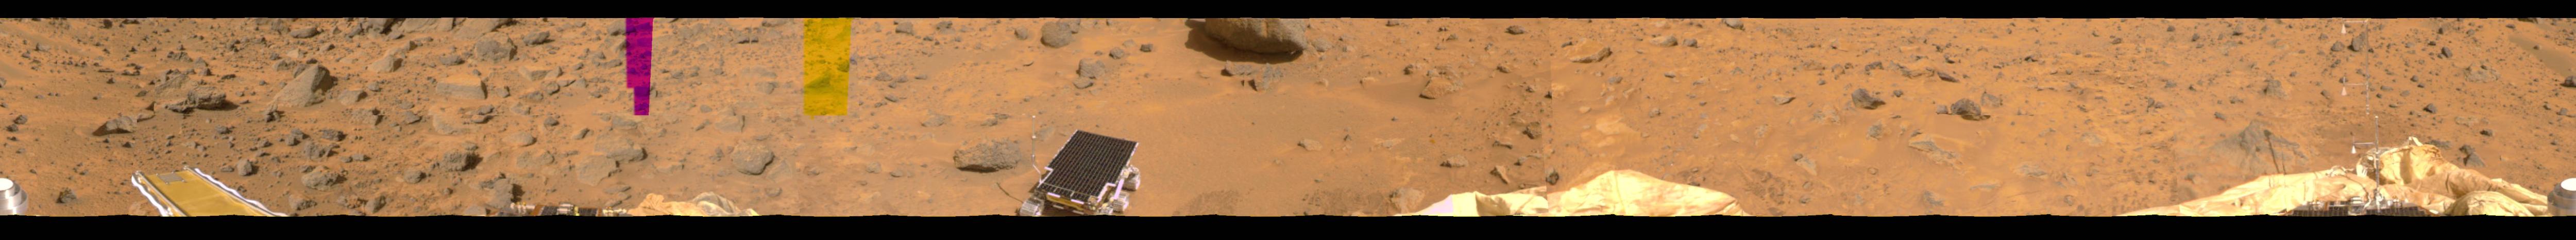 Chetvertyi den': cvetnaya panorama Marsa